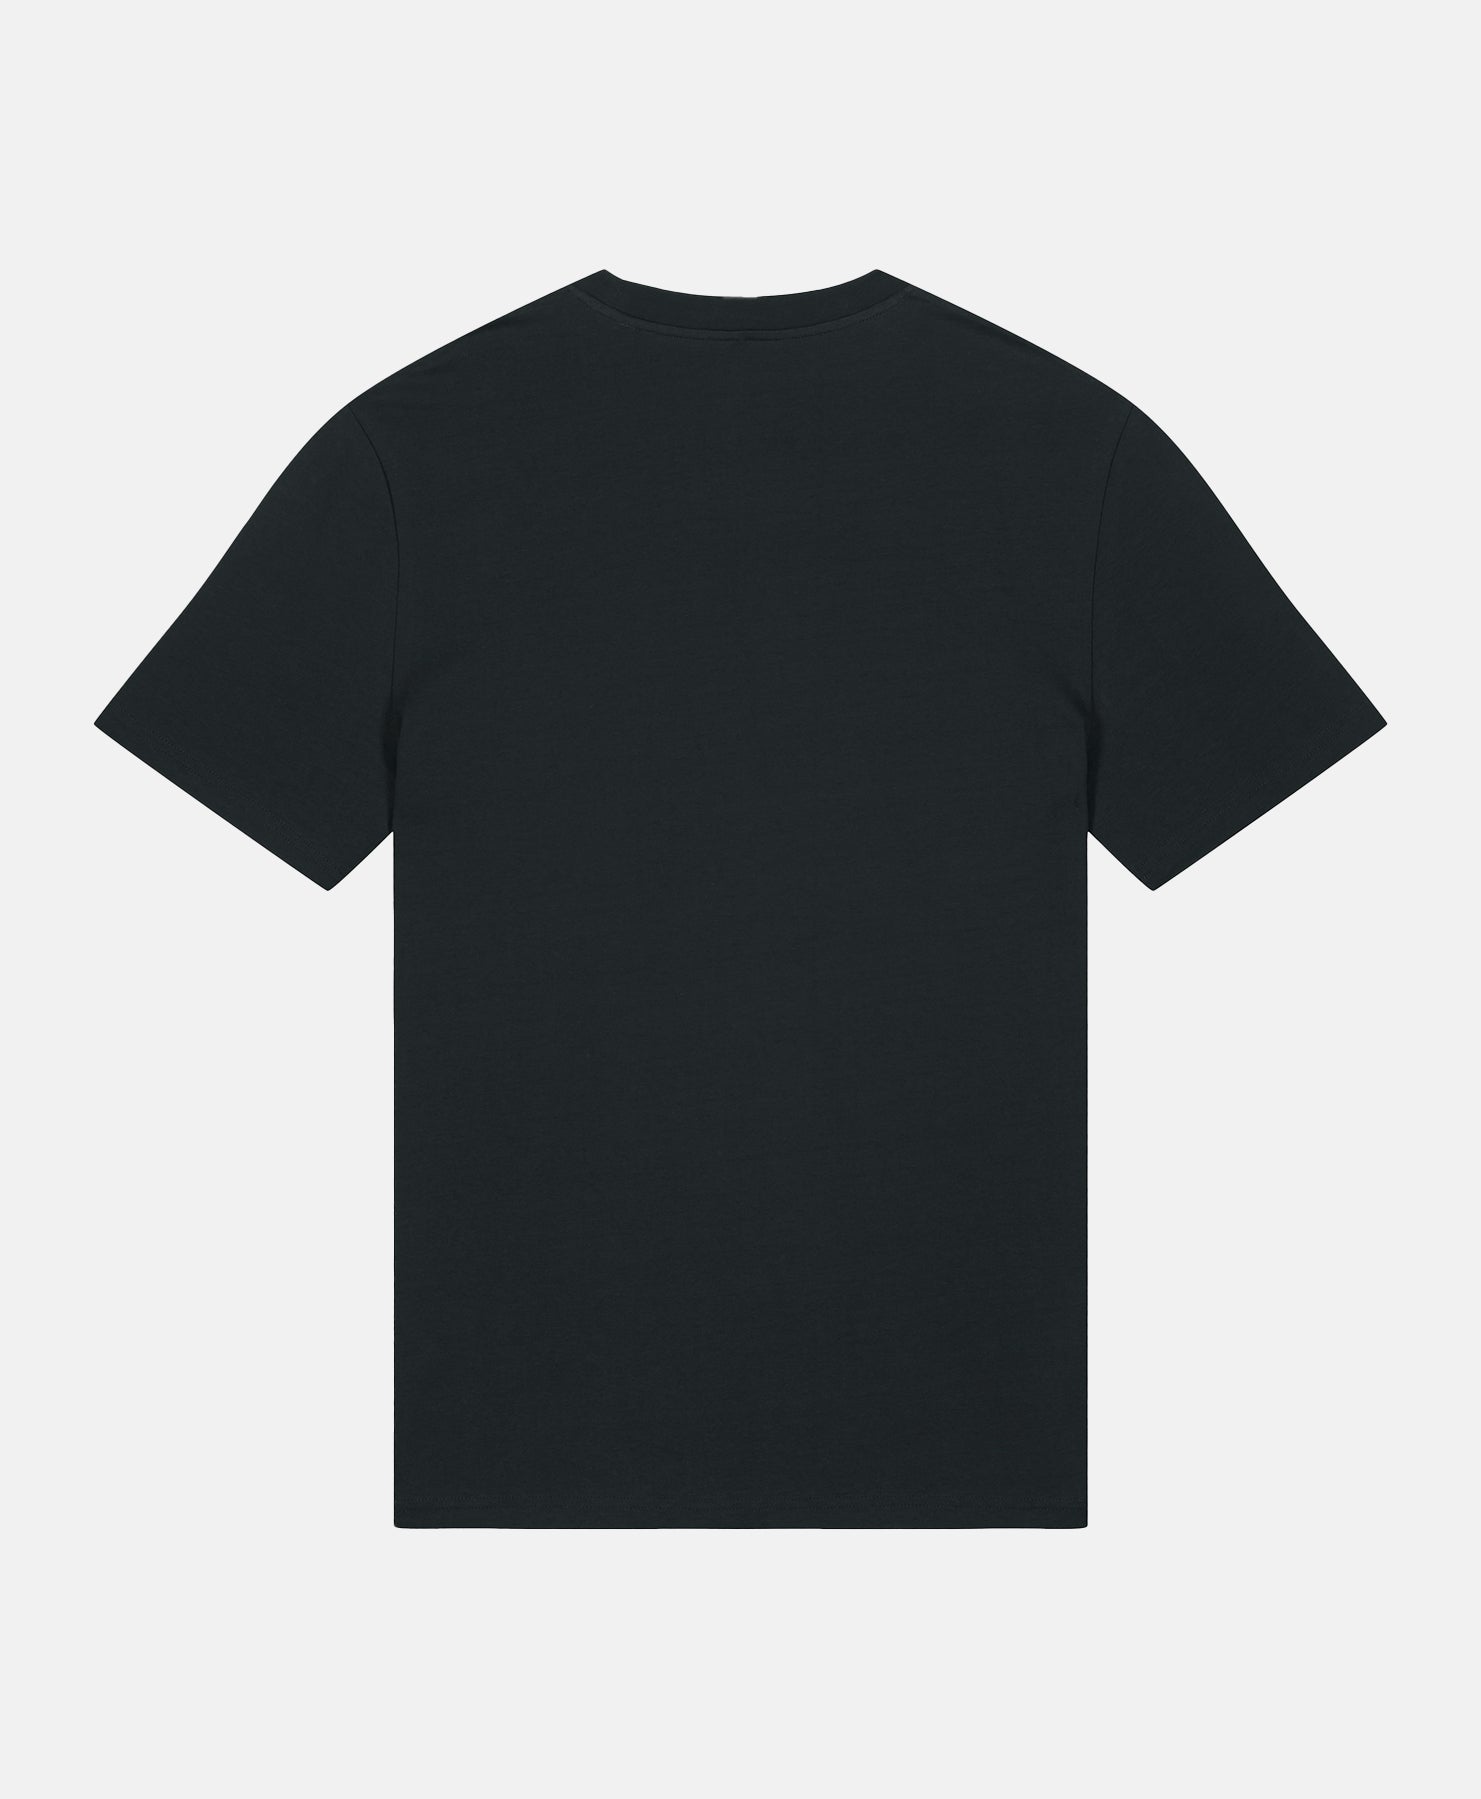 Doberman T-Shirt Black